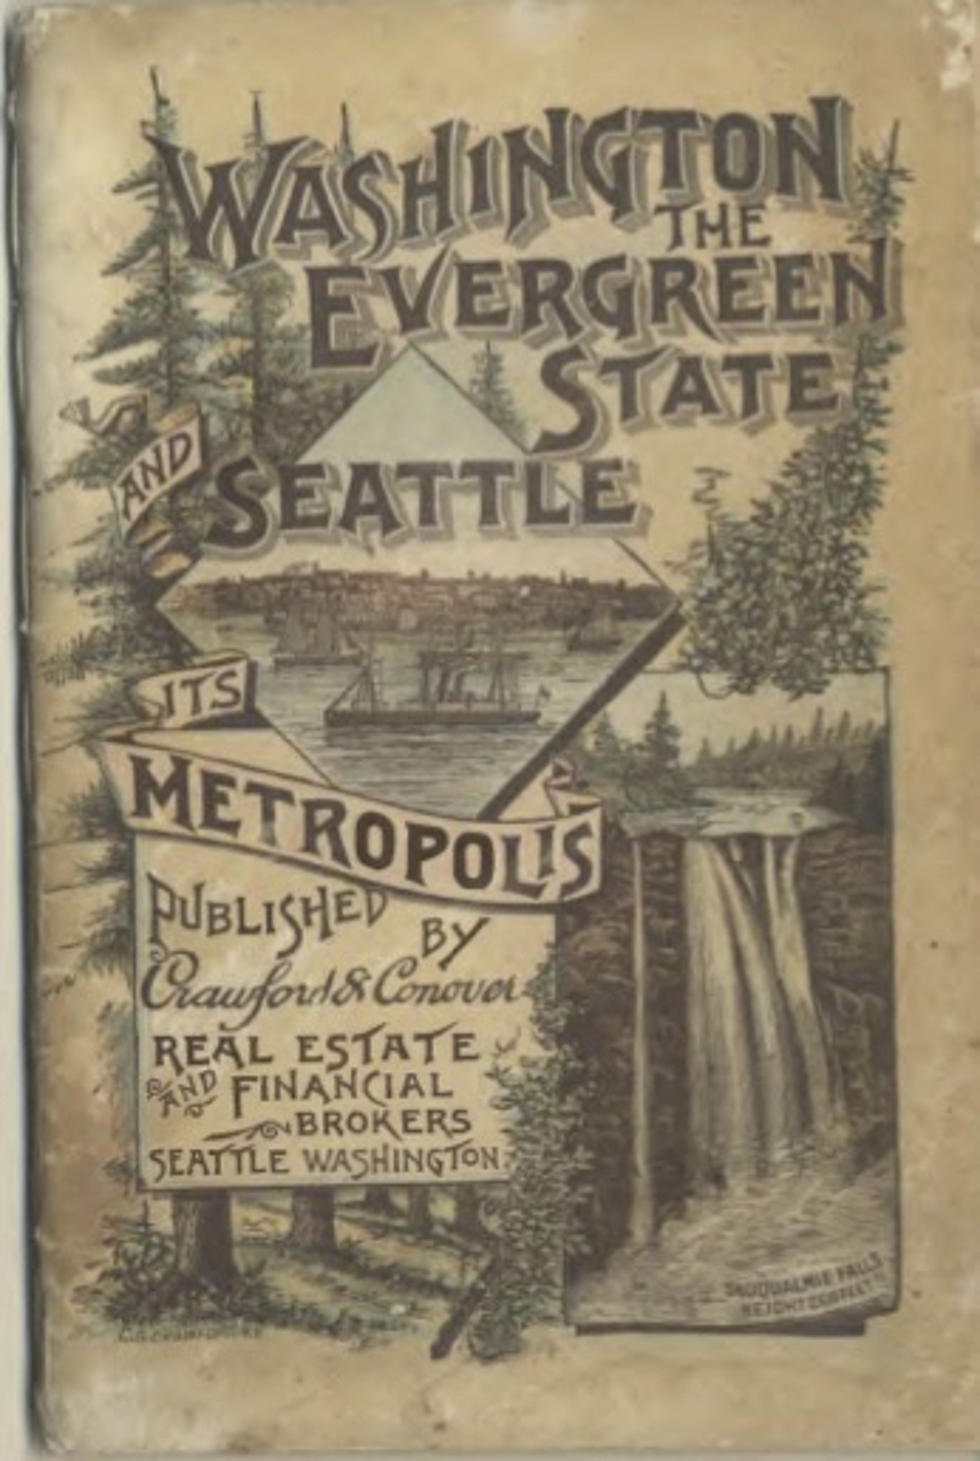 Hold on. ‘The Evergreen State’ isn’t Washington’s nickname?